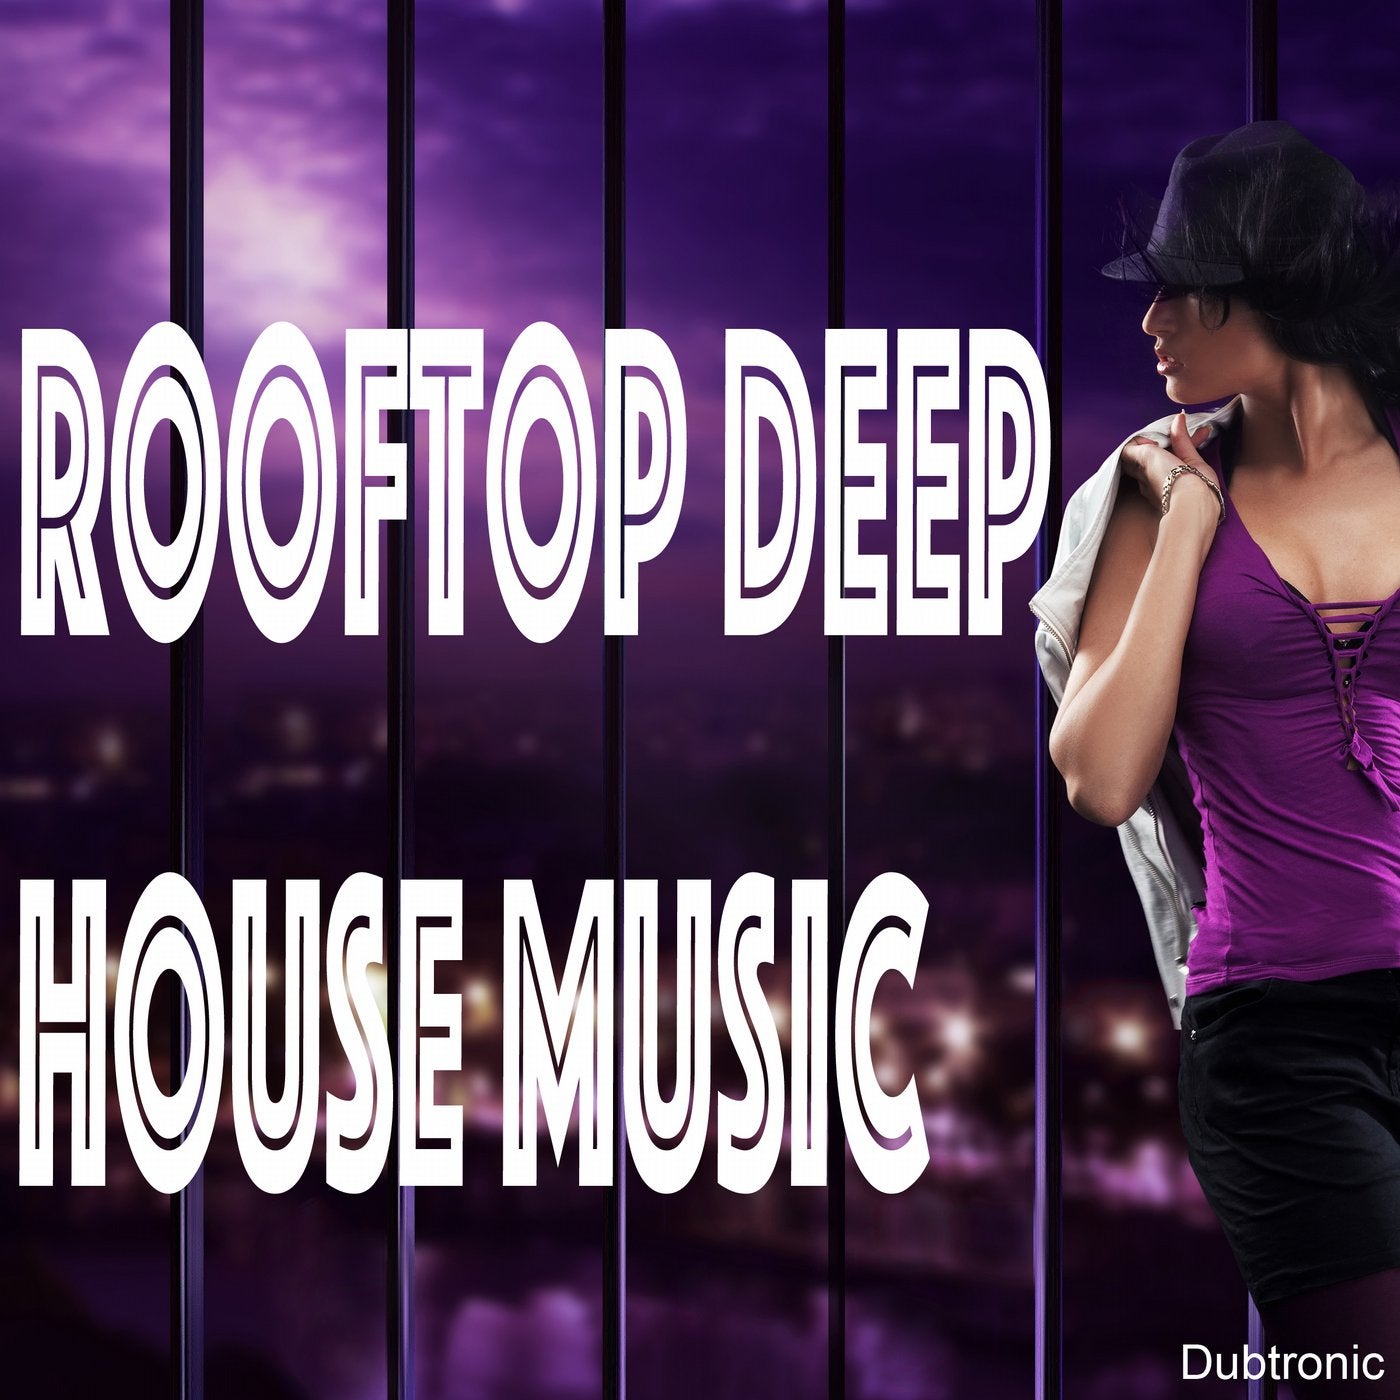 Rooftop Deep House Music